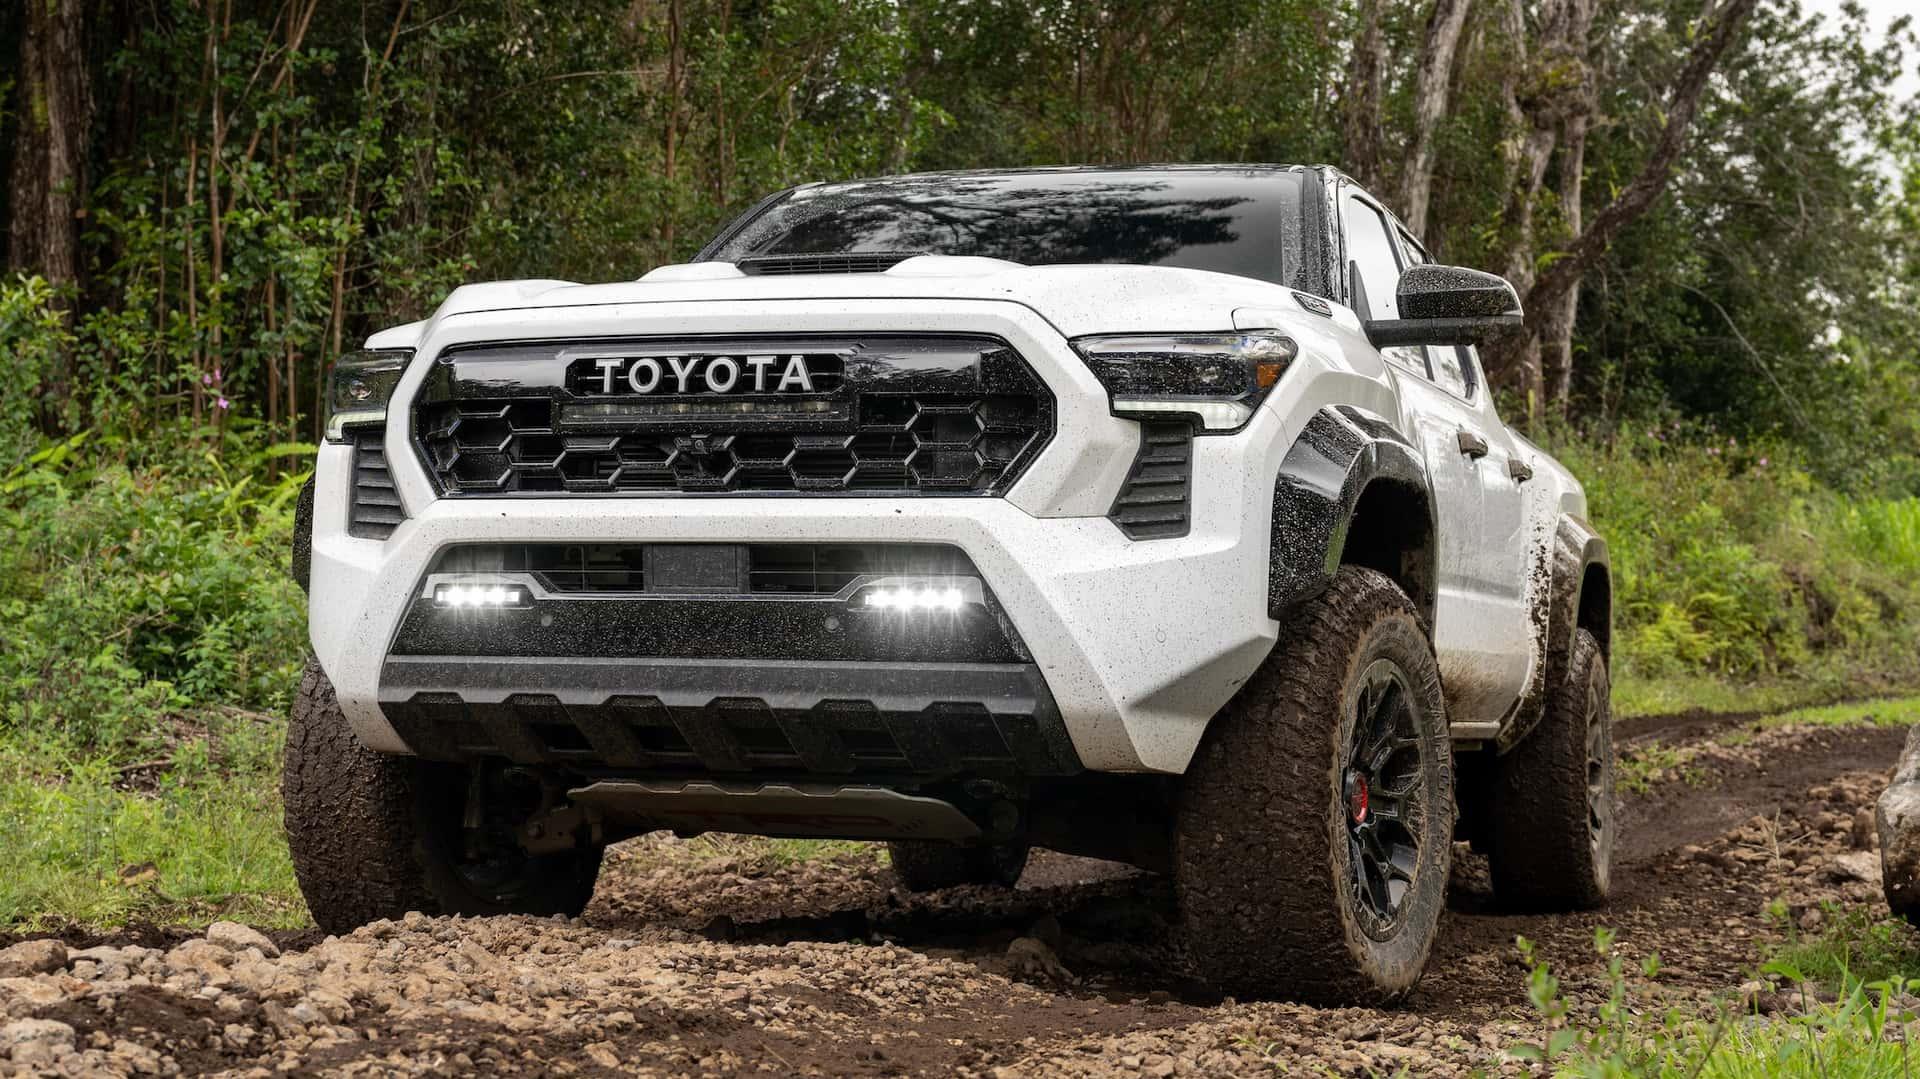 Toyota Taa Trd Pro Gets New Terra Paint That Looks Like Lava